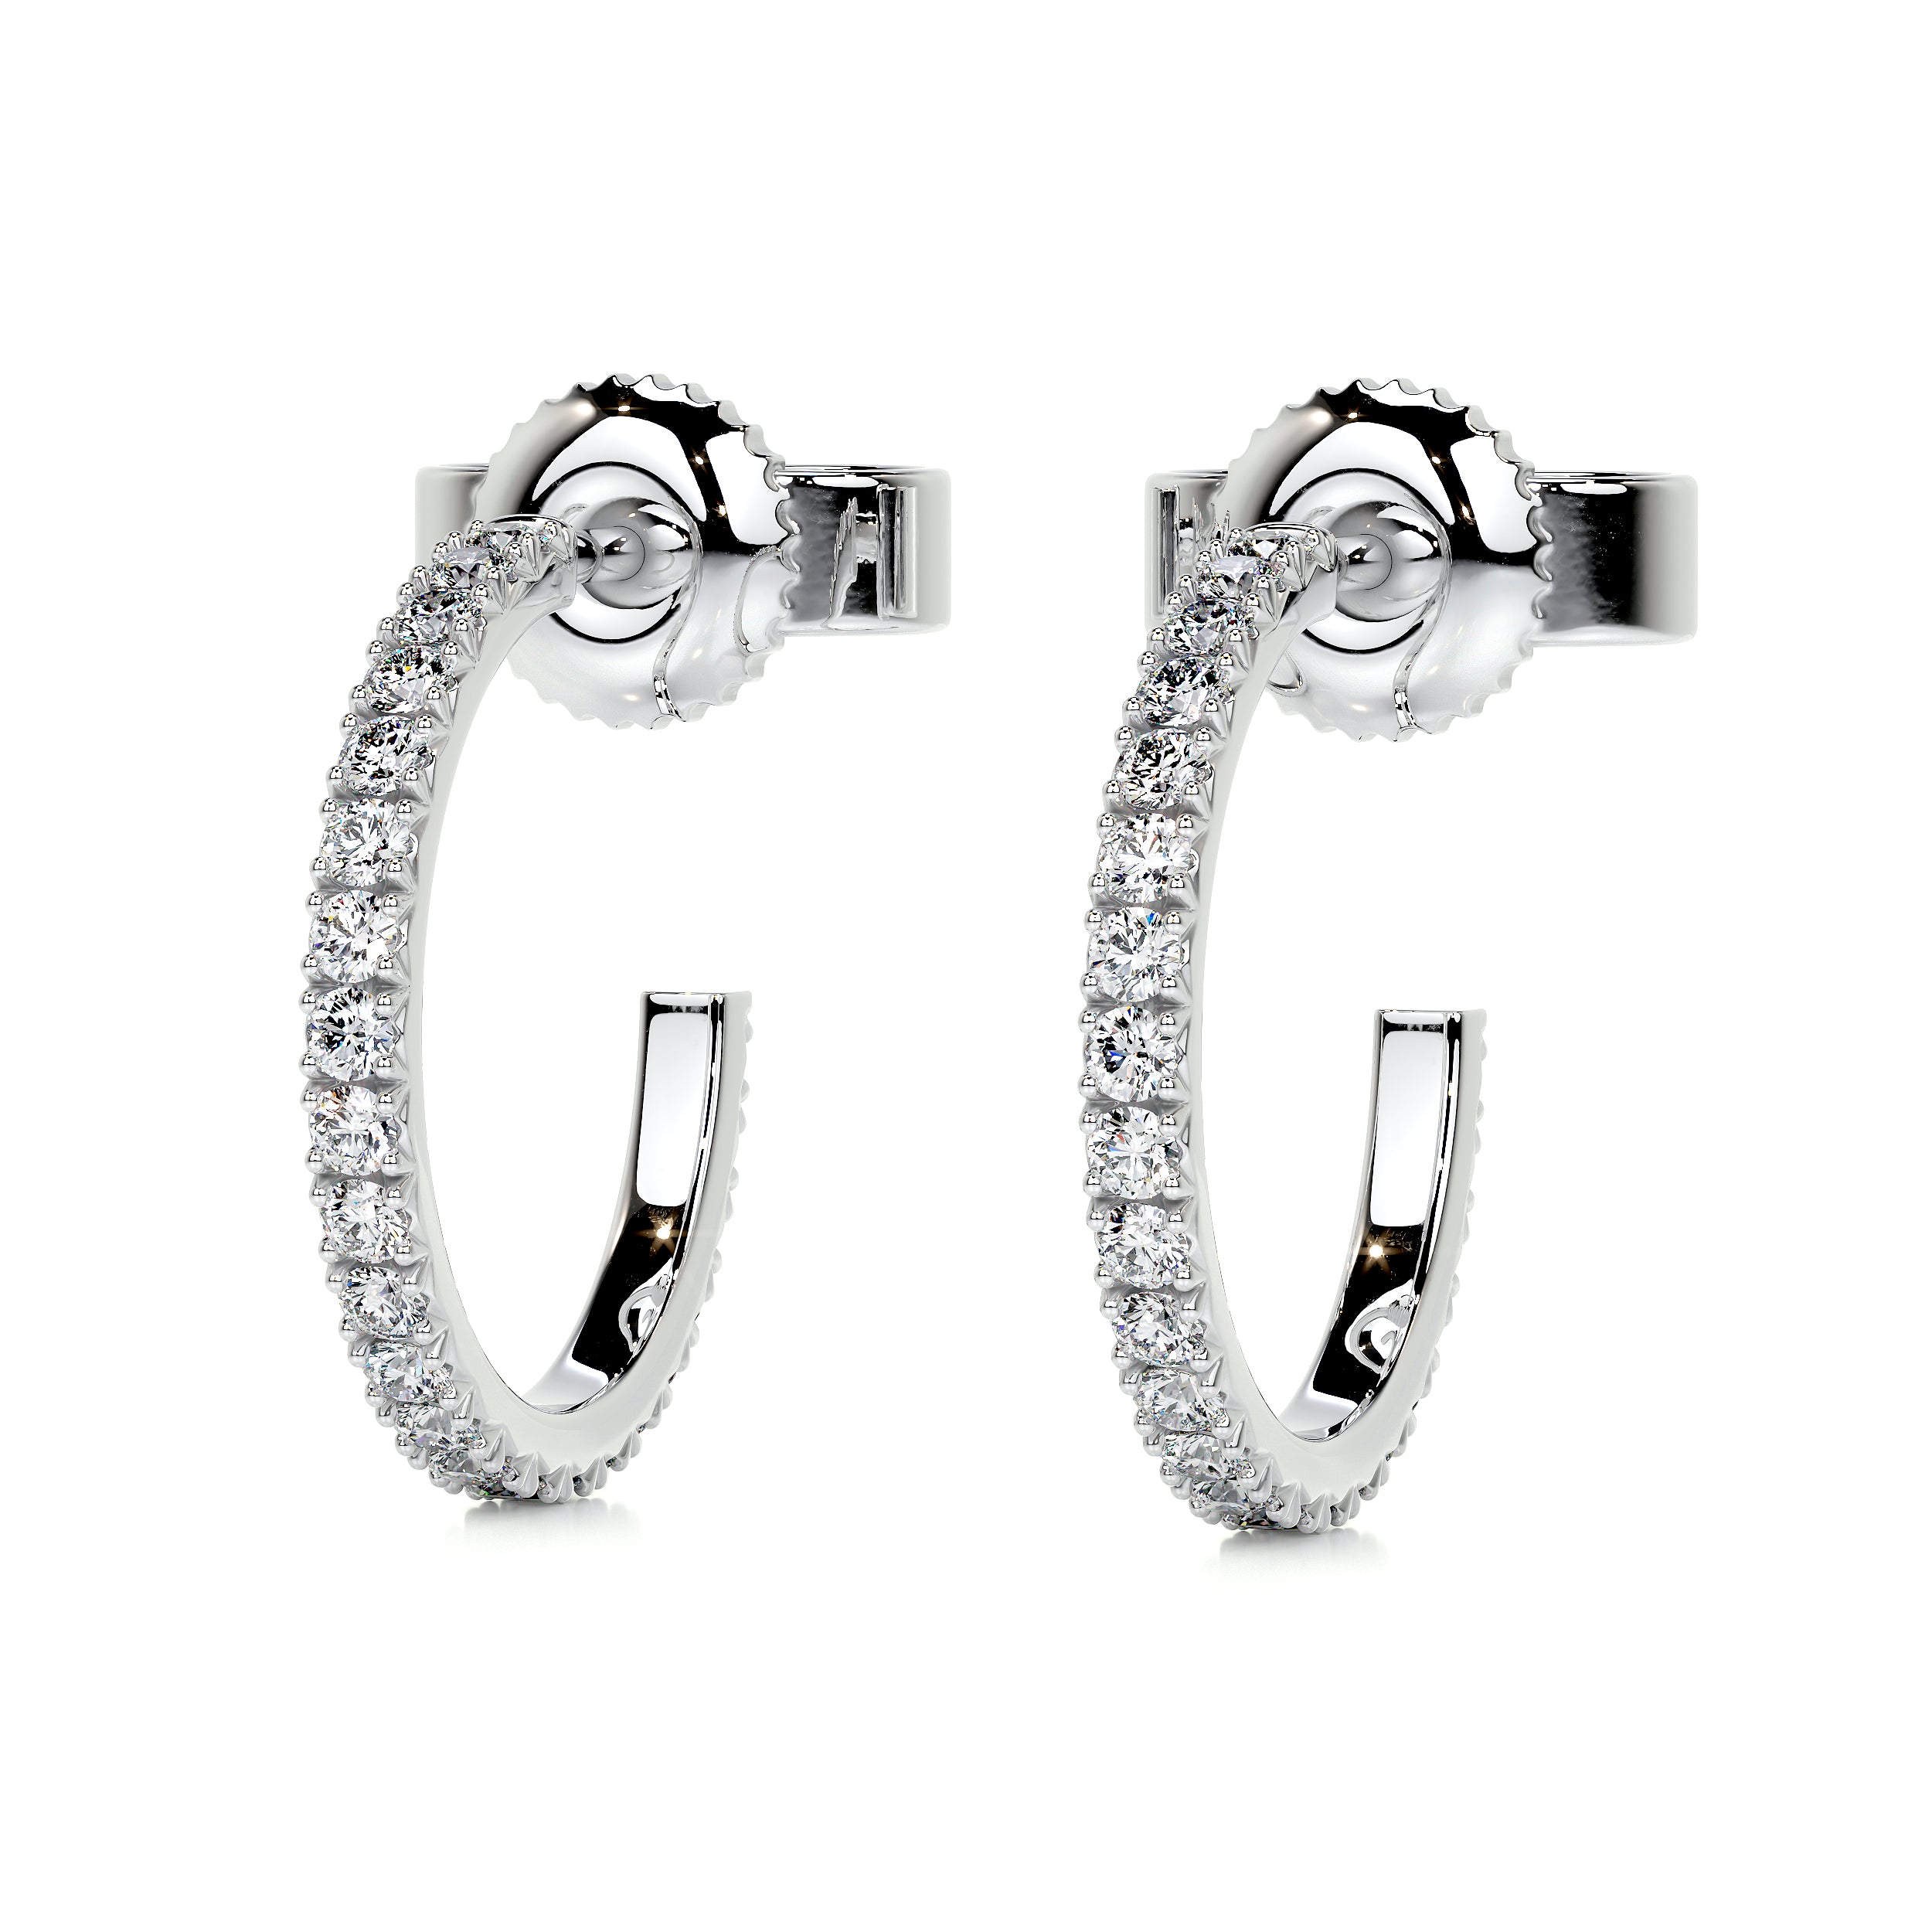 Nicole Diamond Earrings   (0.50 Carat) -14K White Gold